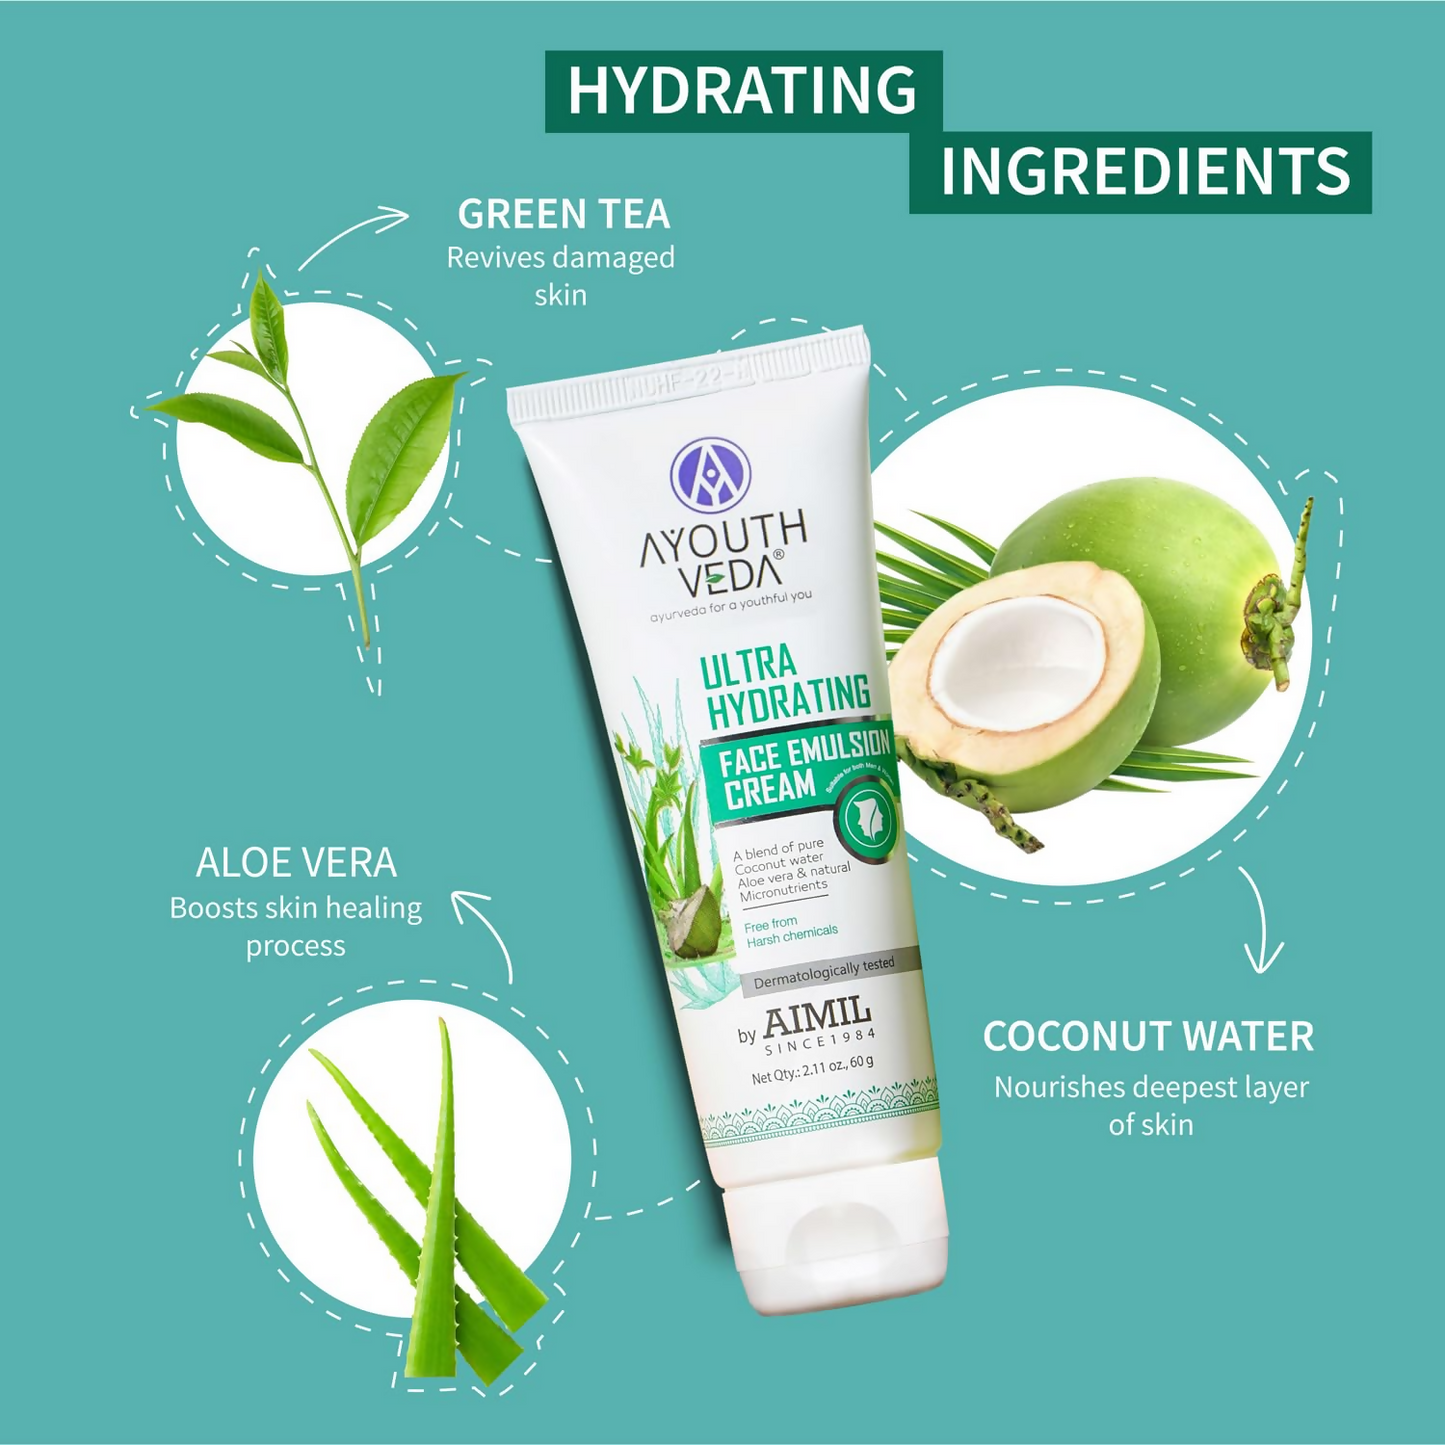 Ayouthveda Ultra Hydrating Face Emulsion Cream